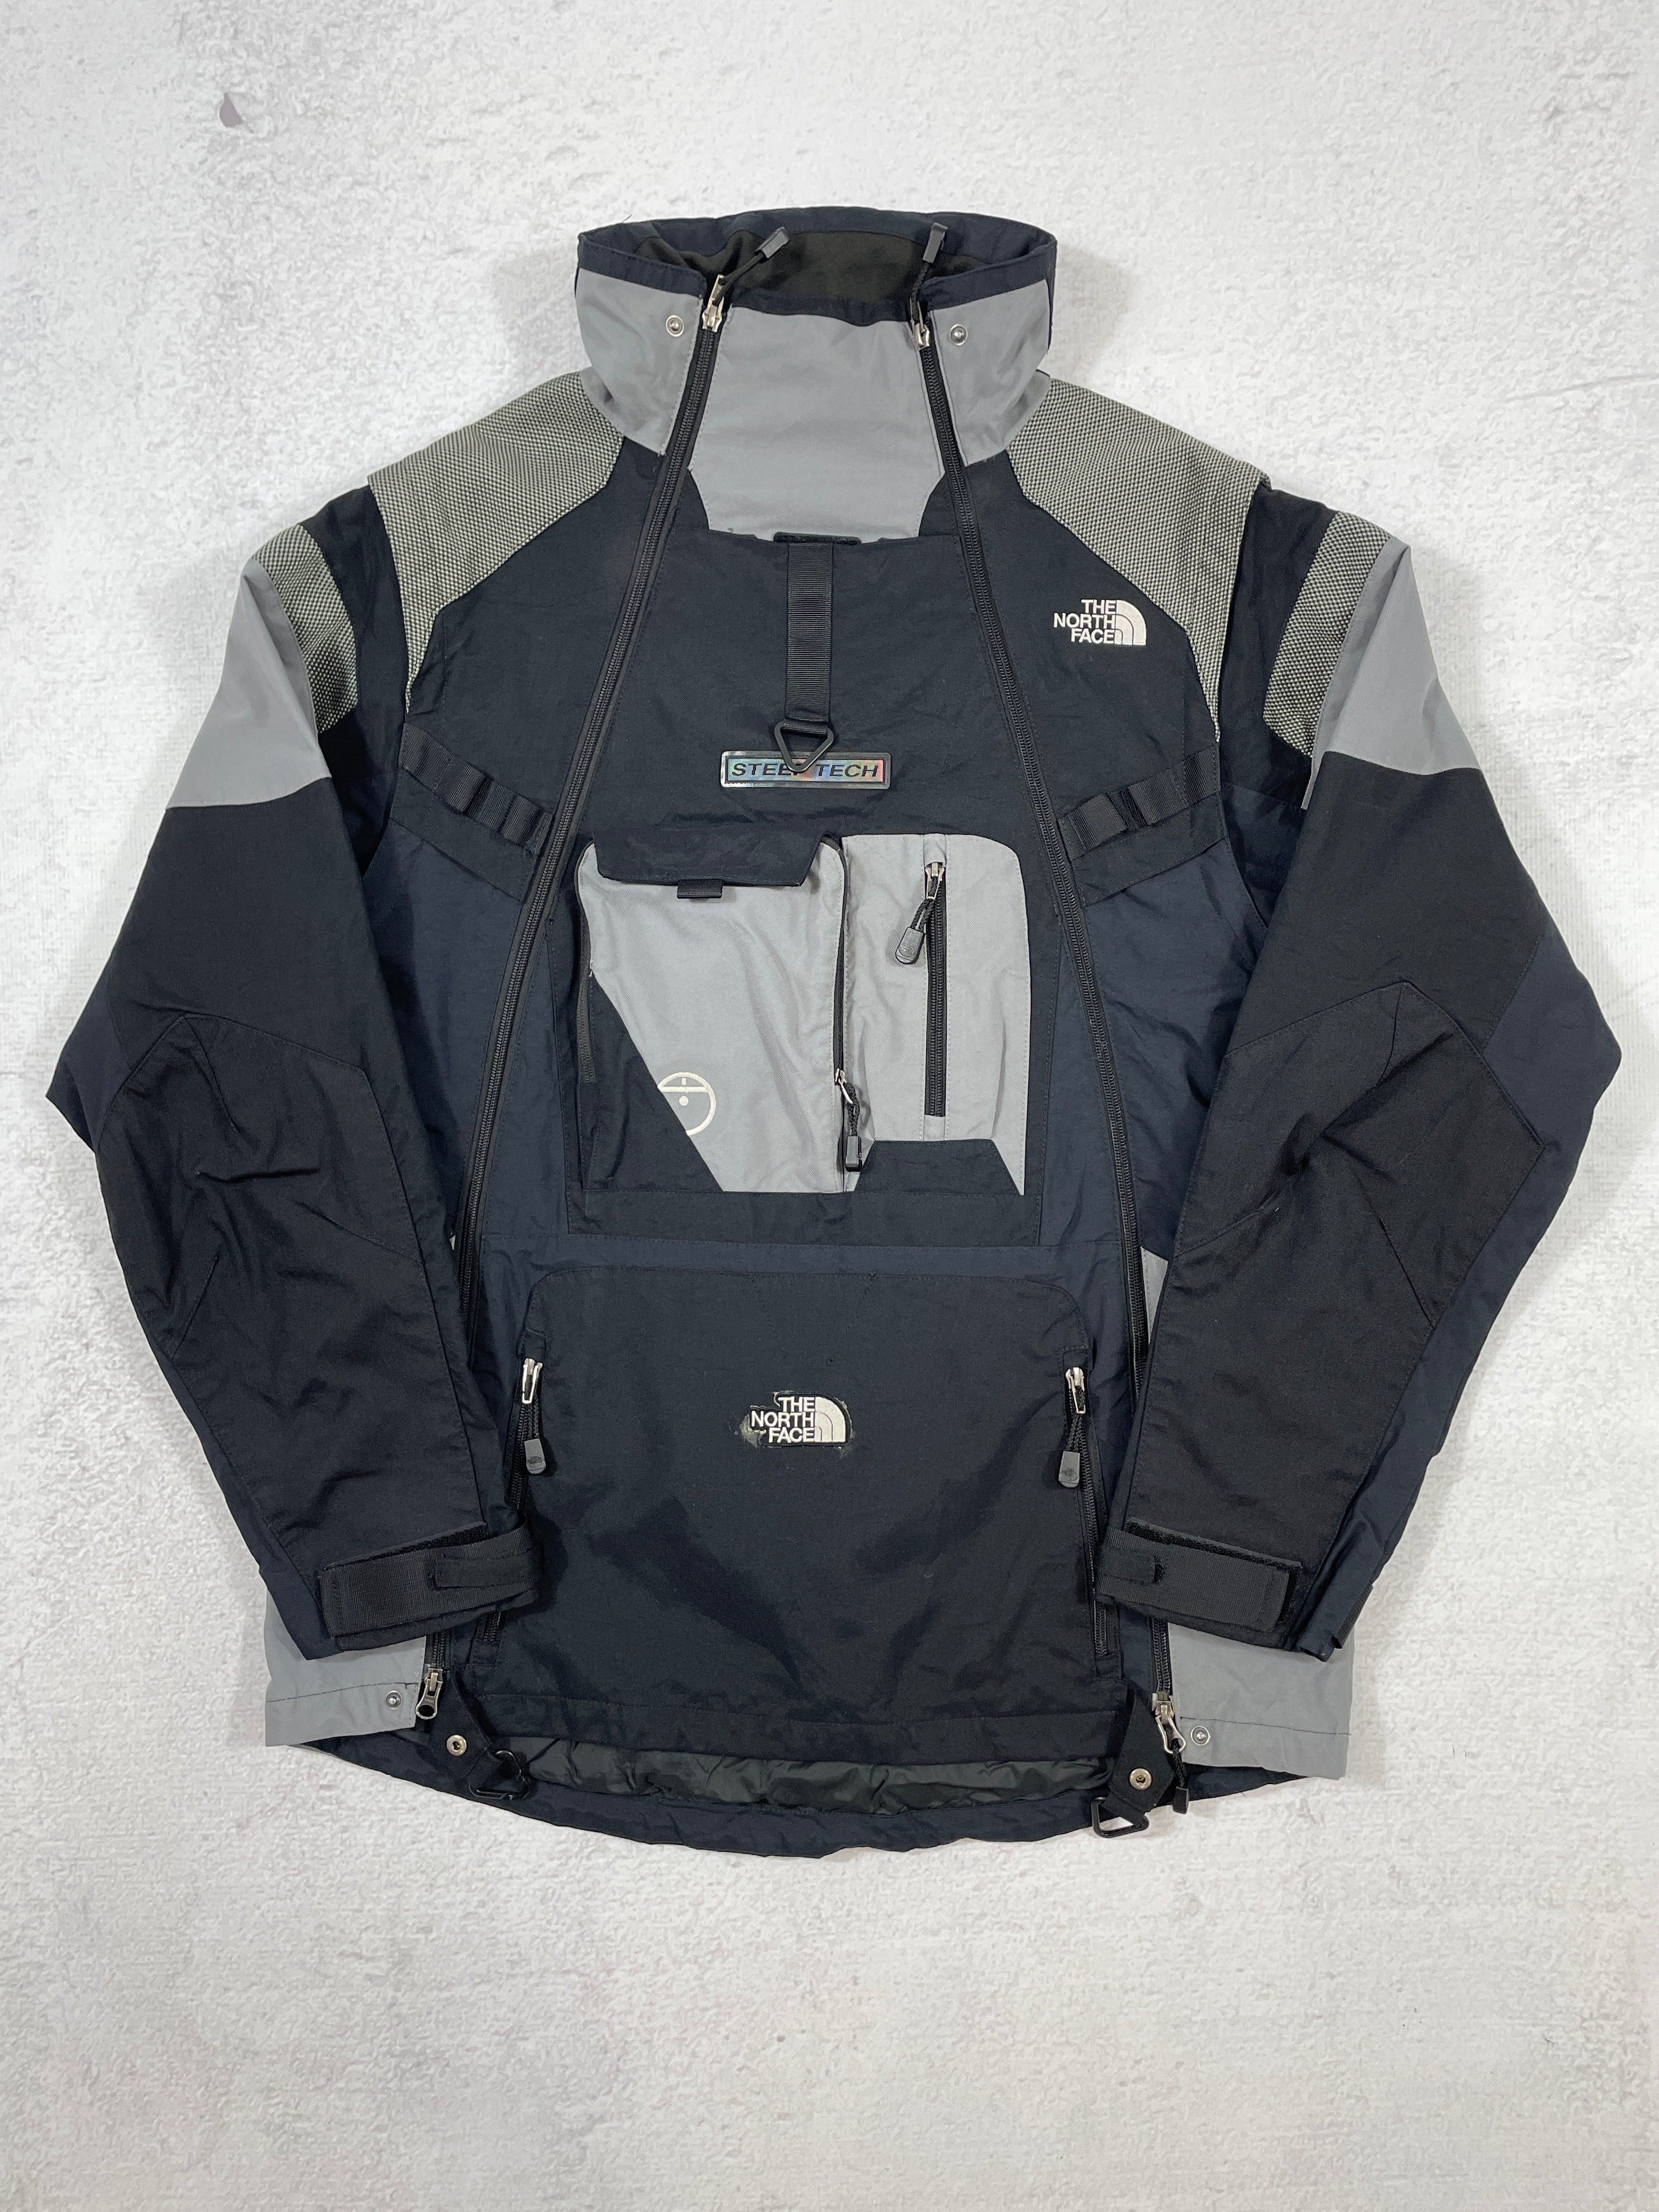 Vintage The North Face Steep Tech Lightweight Jacket - Men's XL